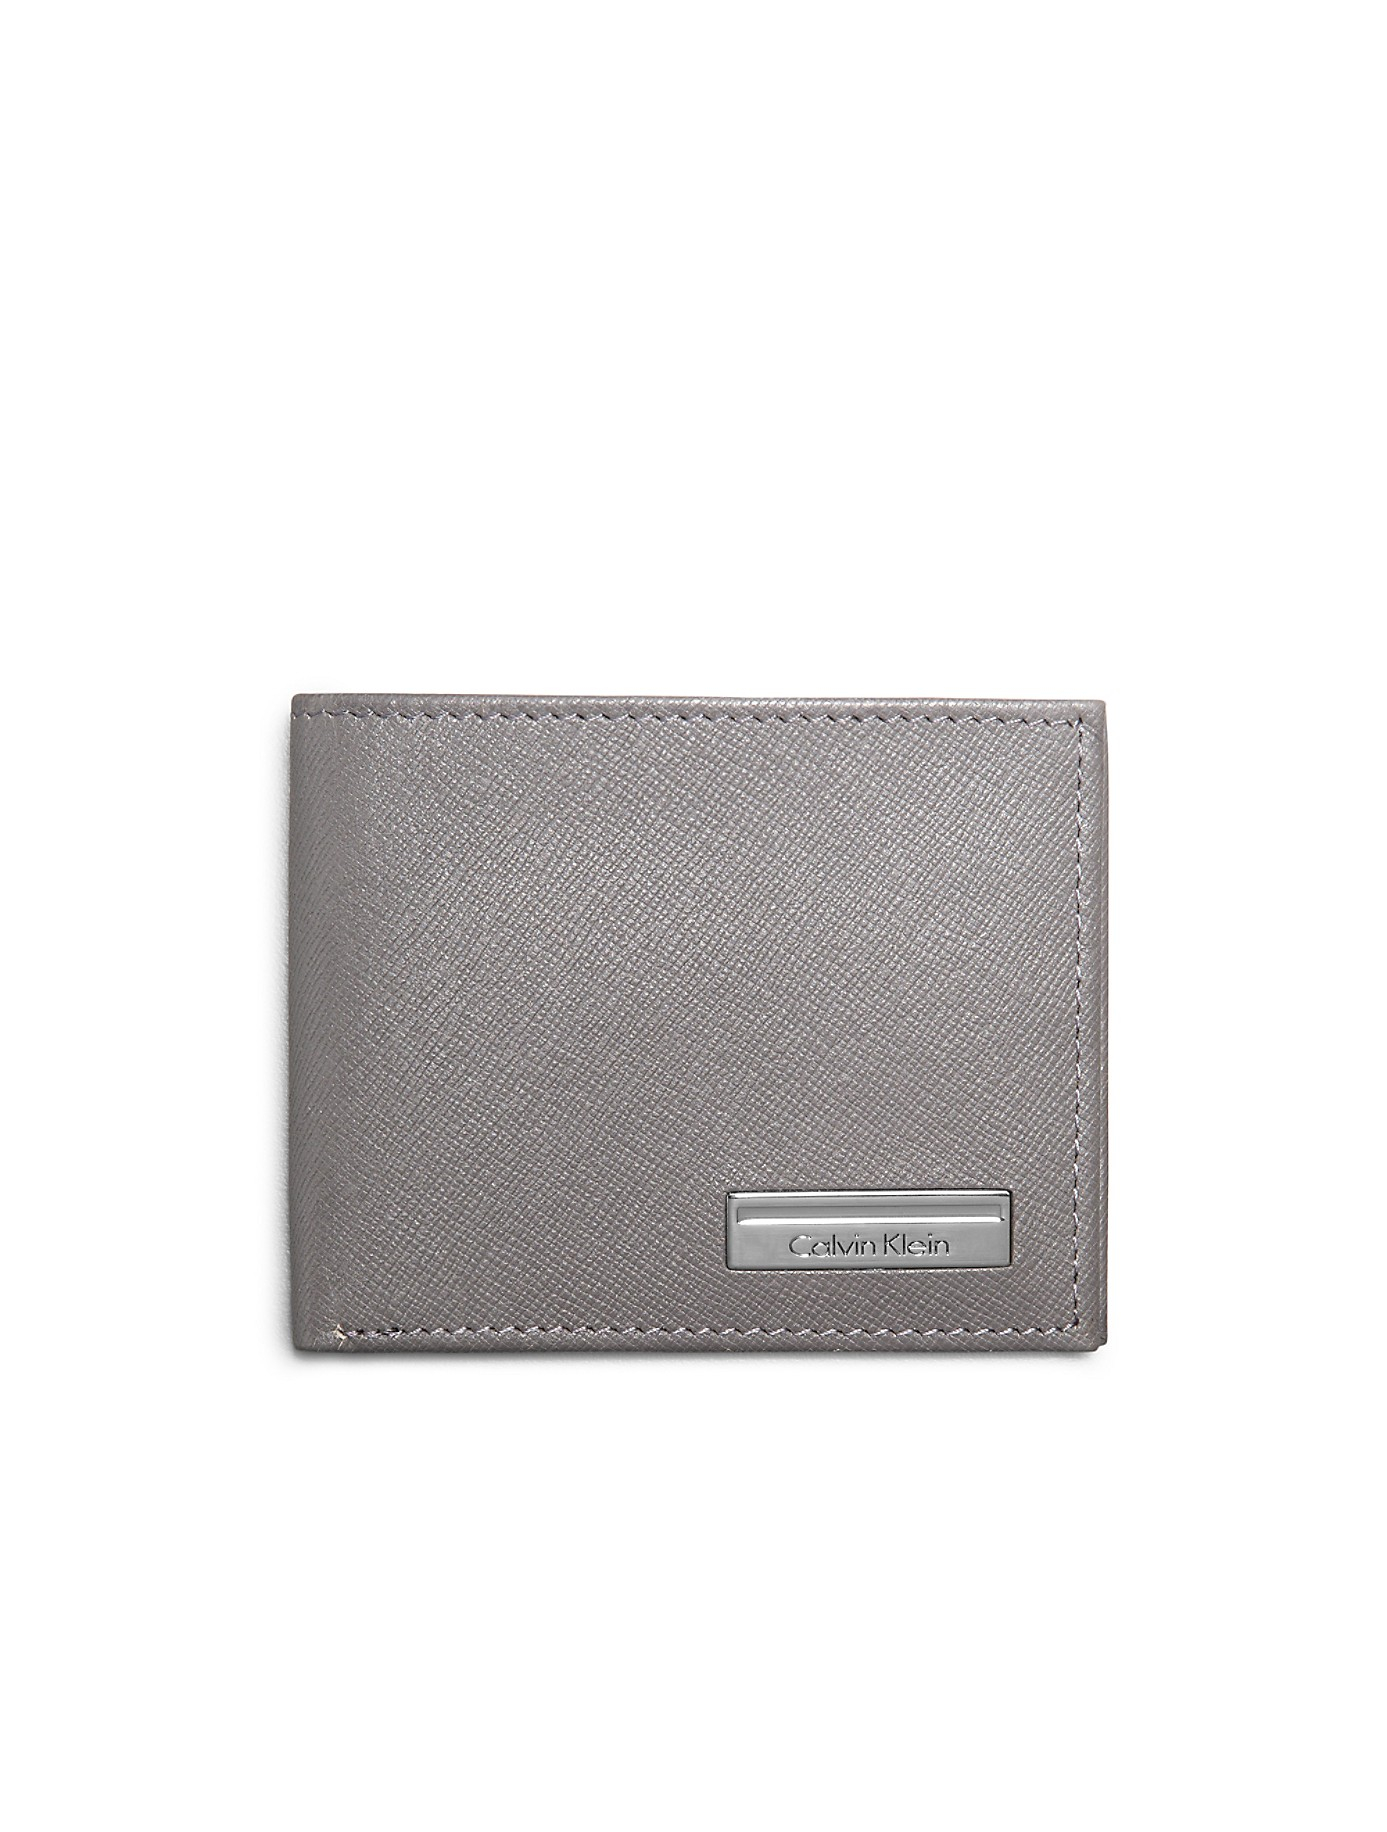 Calvin klein White Label Saffiano Leather Slim Fold + Coin Pocket ...